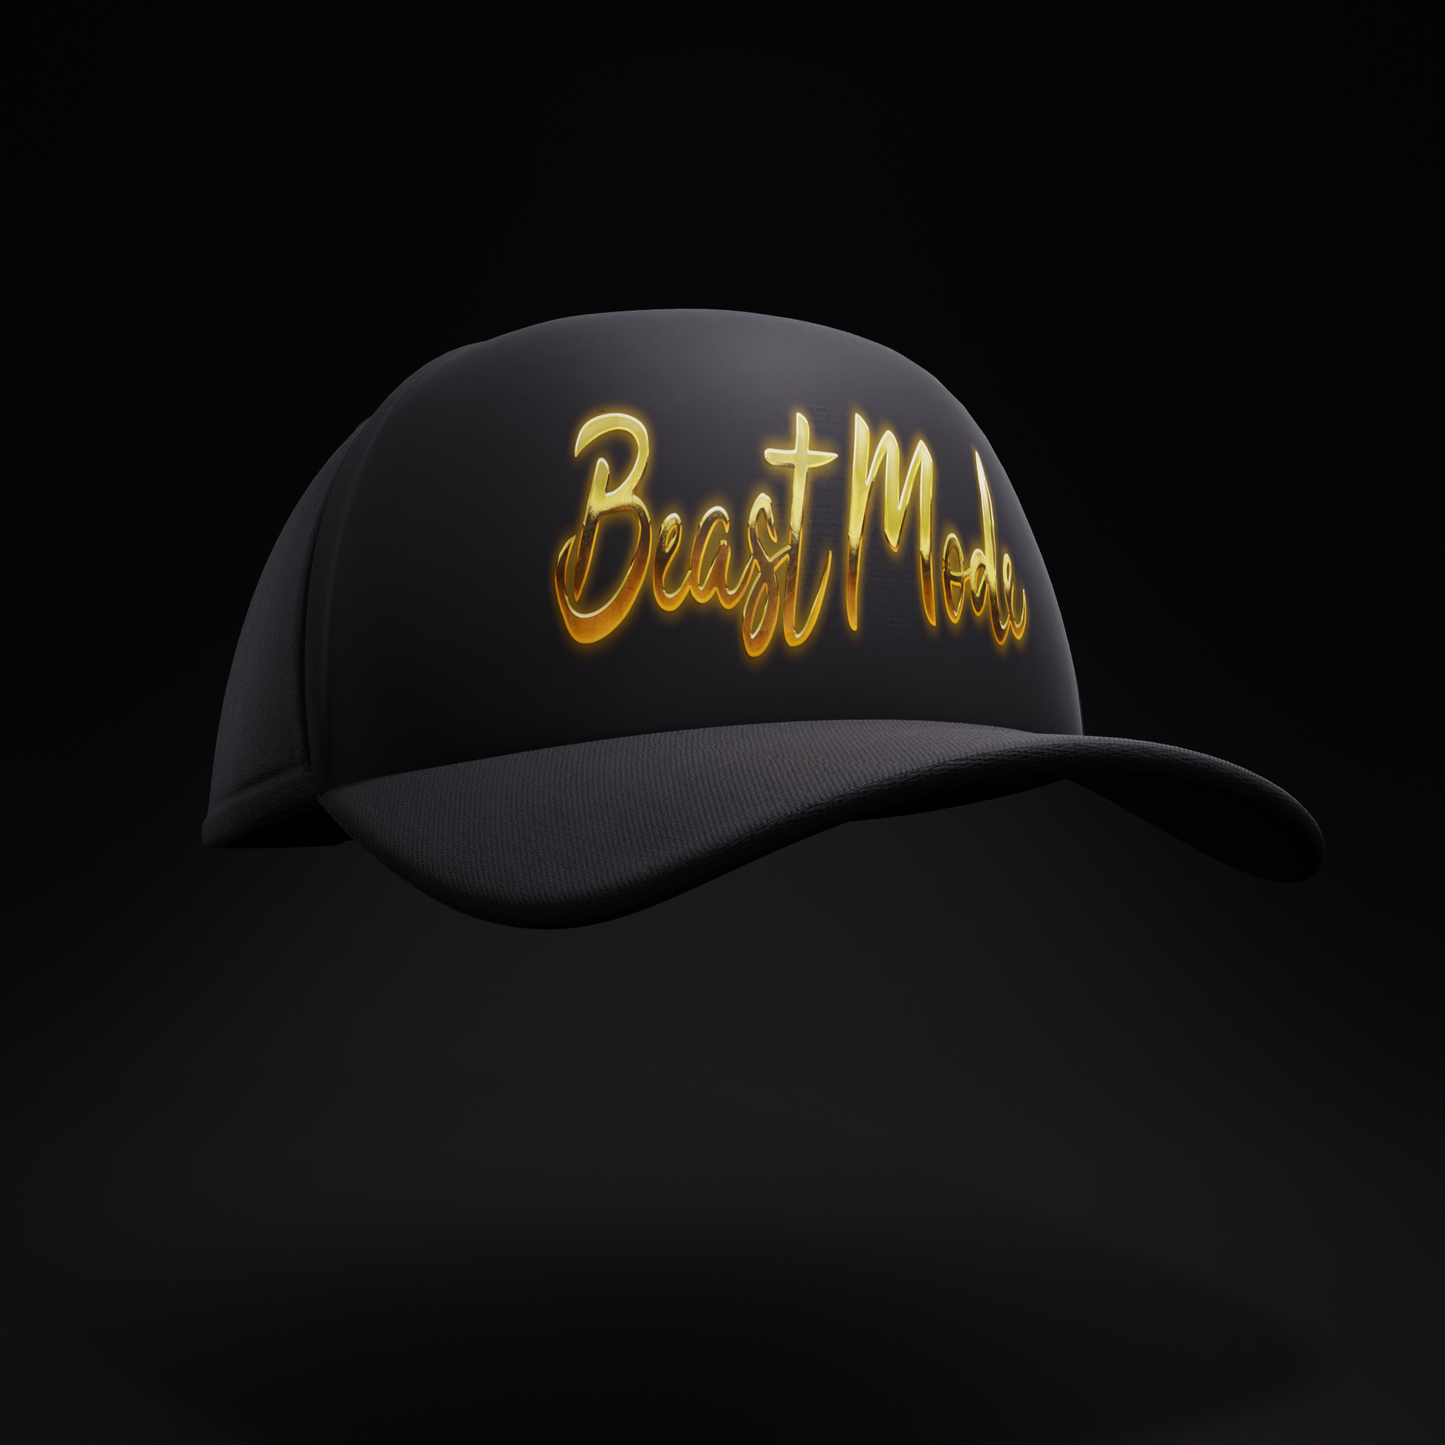 BeastMode 5 Panel Snapback Black/Gold